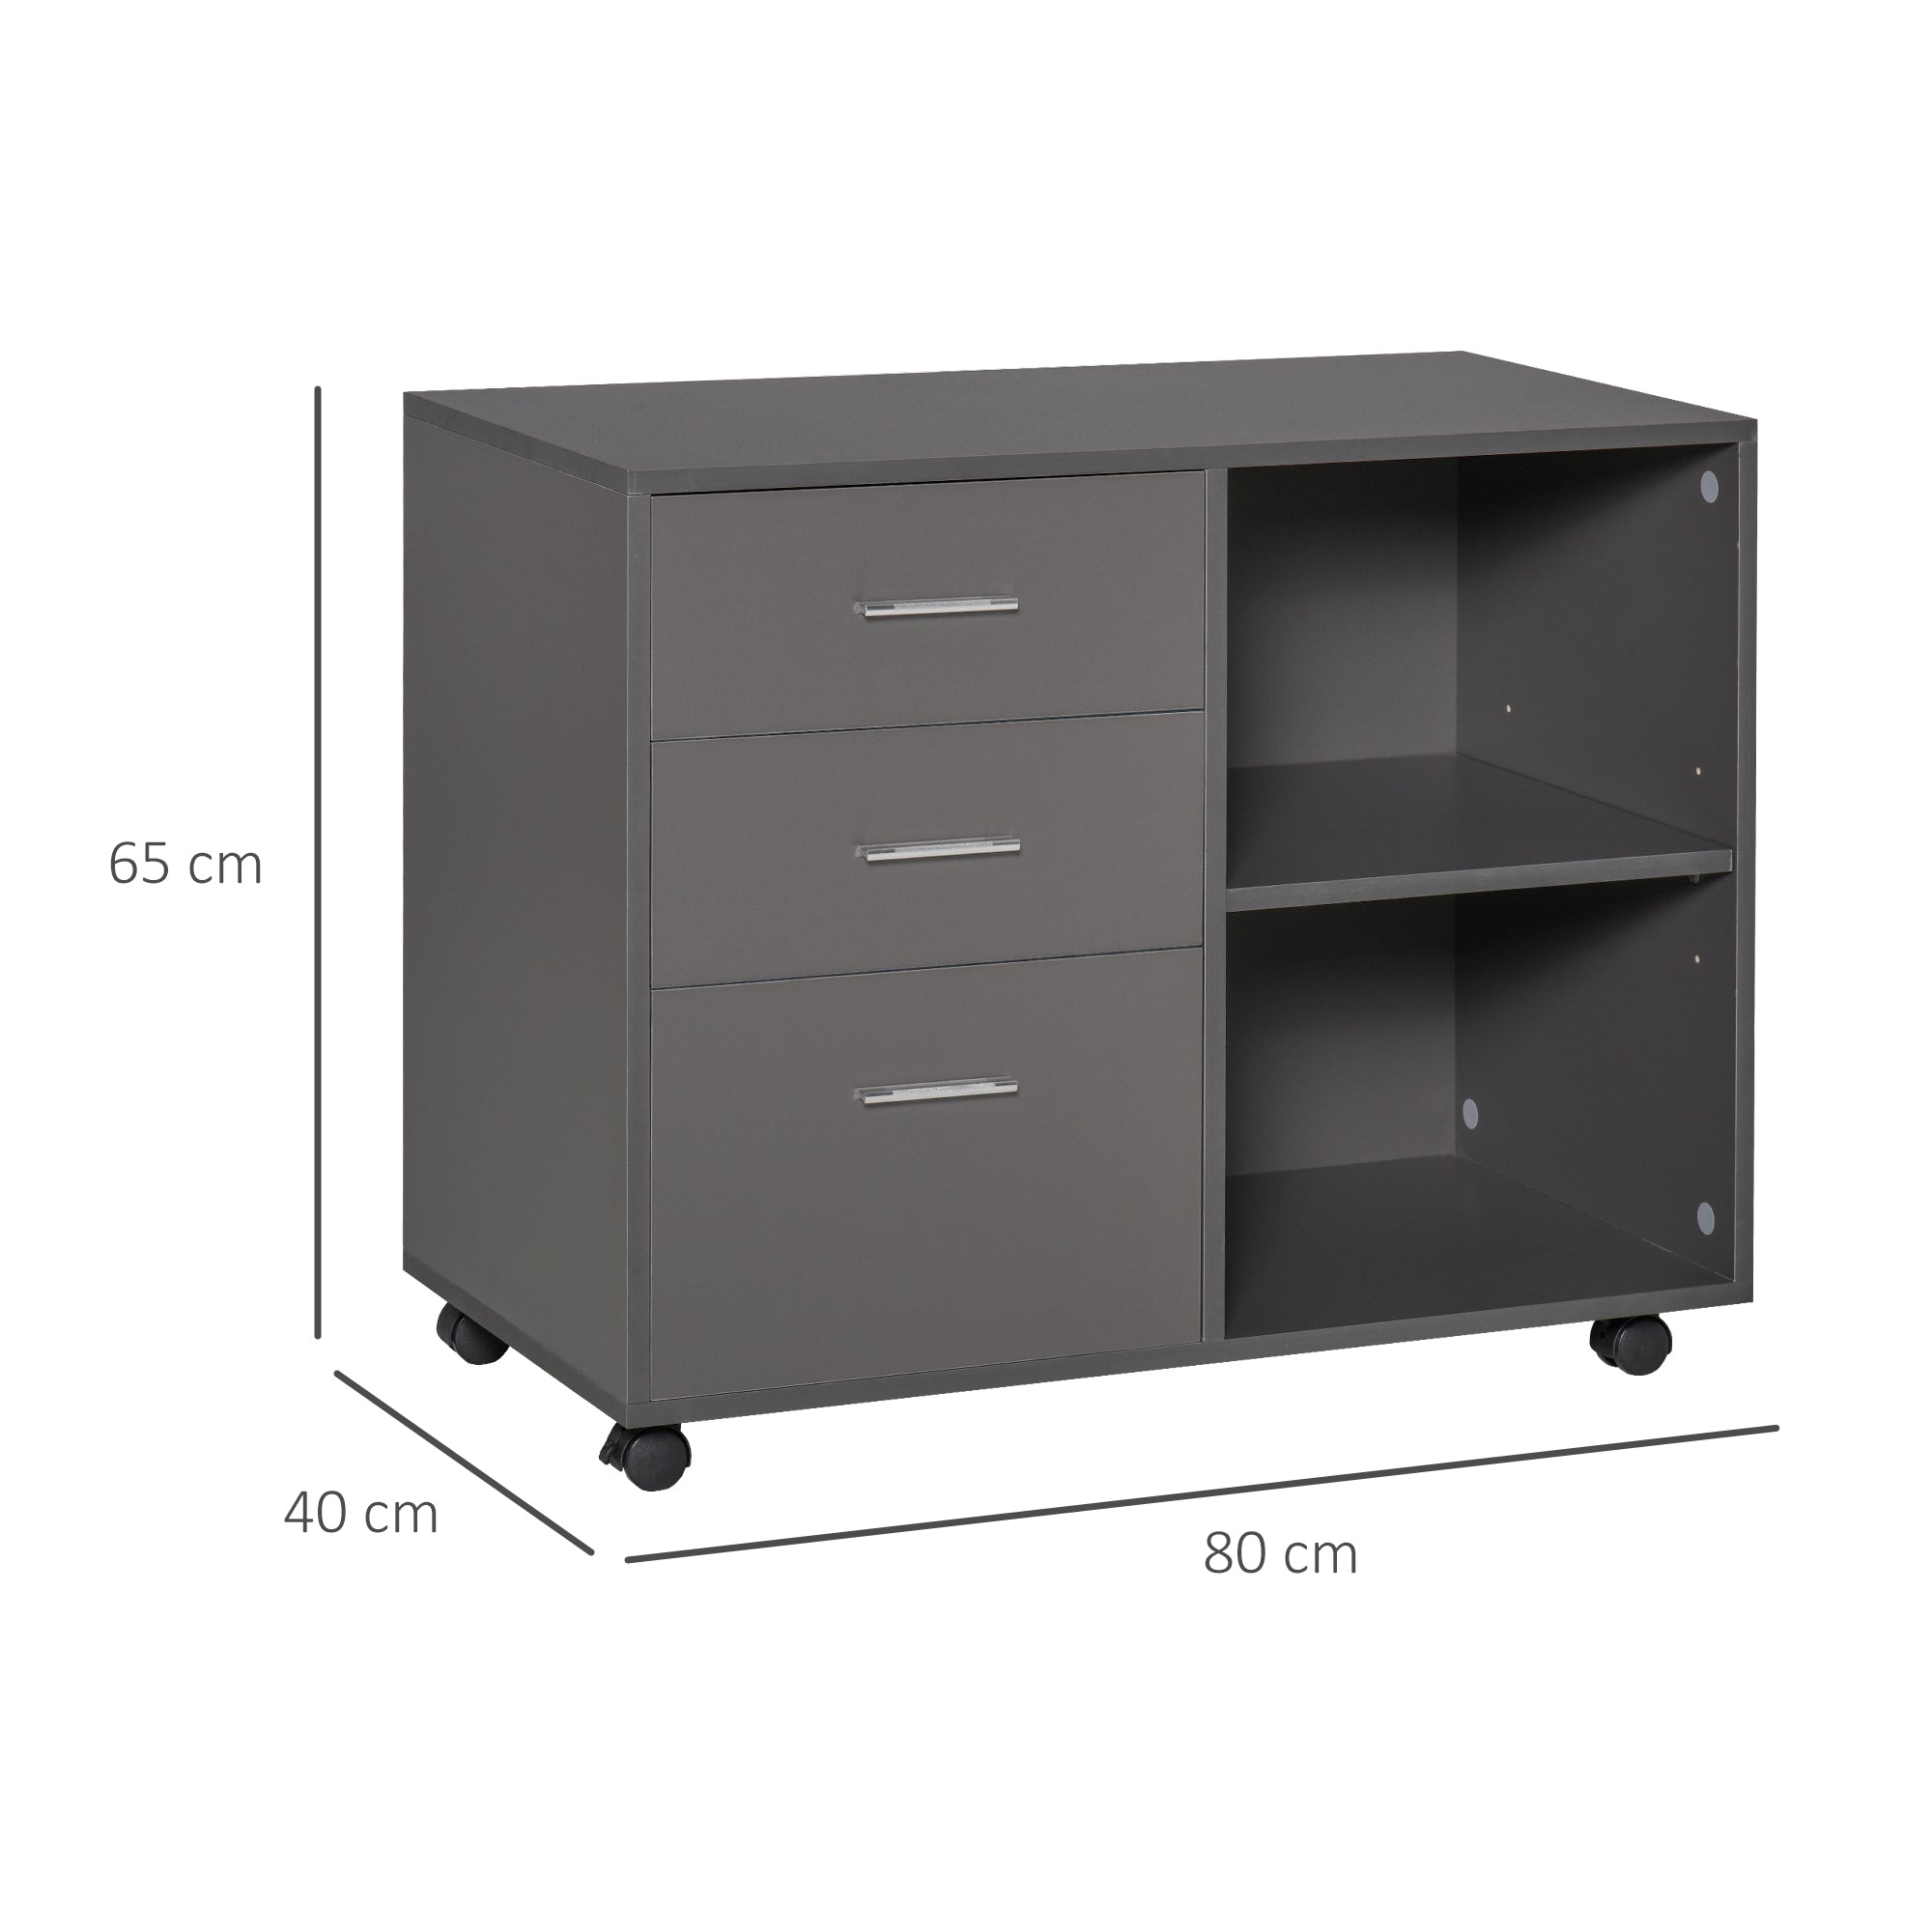 Freestanding Printer Stand Unit Office Desk Side Mobile Storage w/ Wheels 3 Drawers, 2 Open Shelves Modern Style 80L x 40W x 65H cm - Grey-2